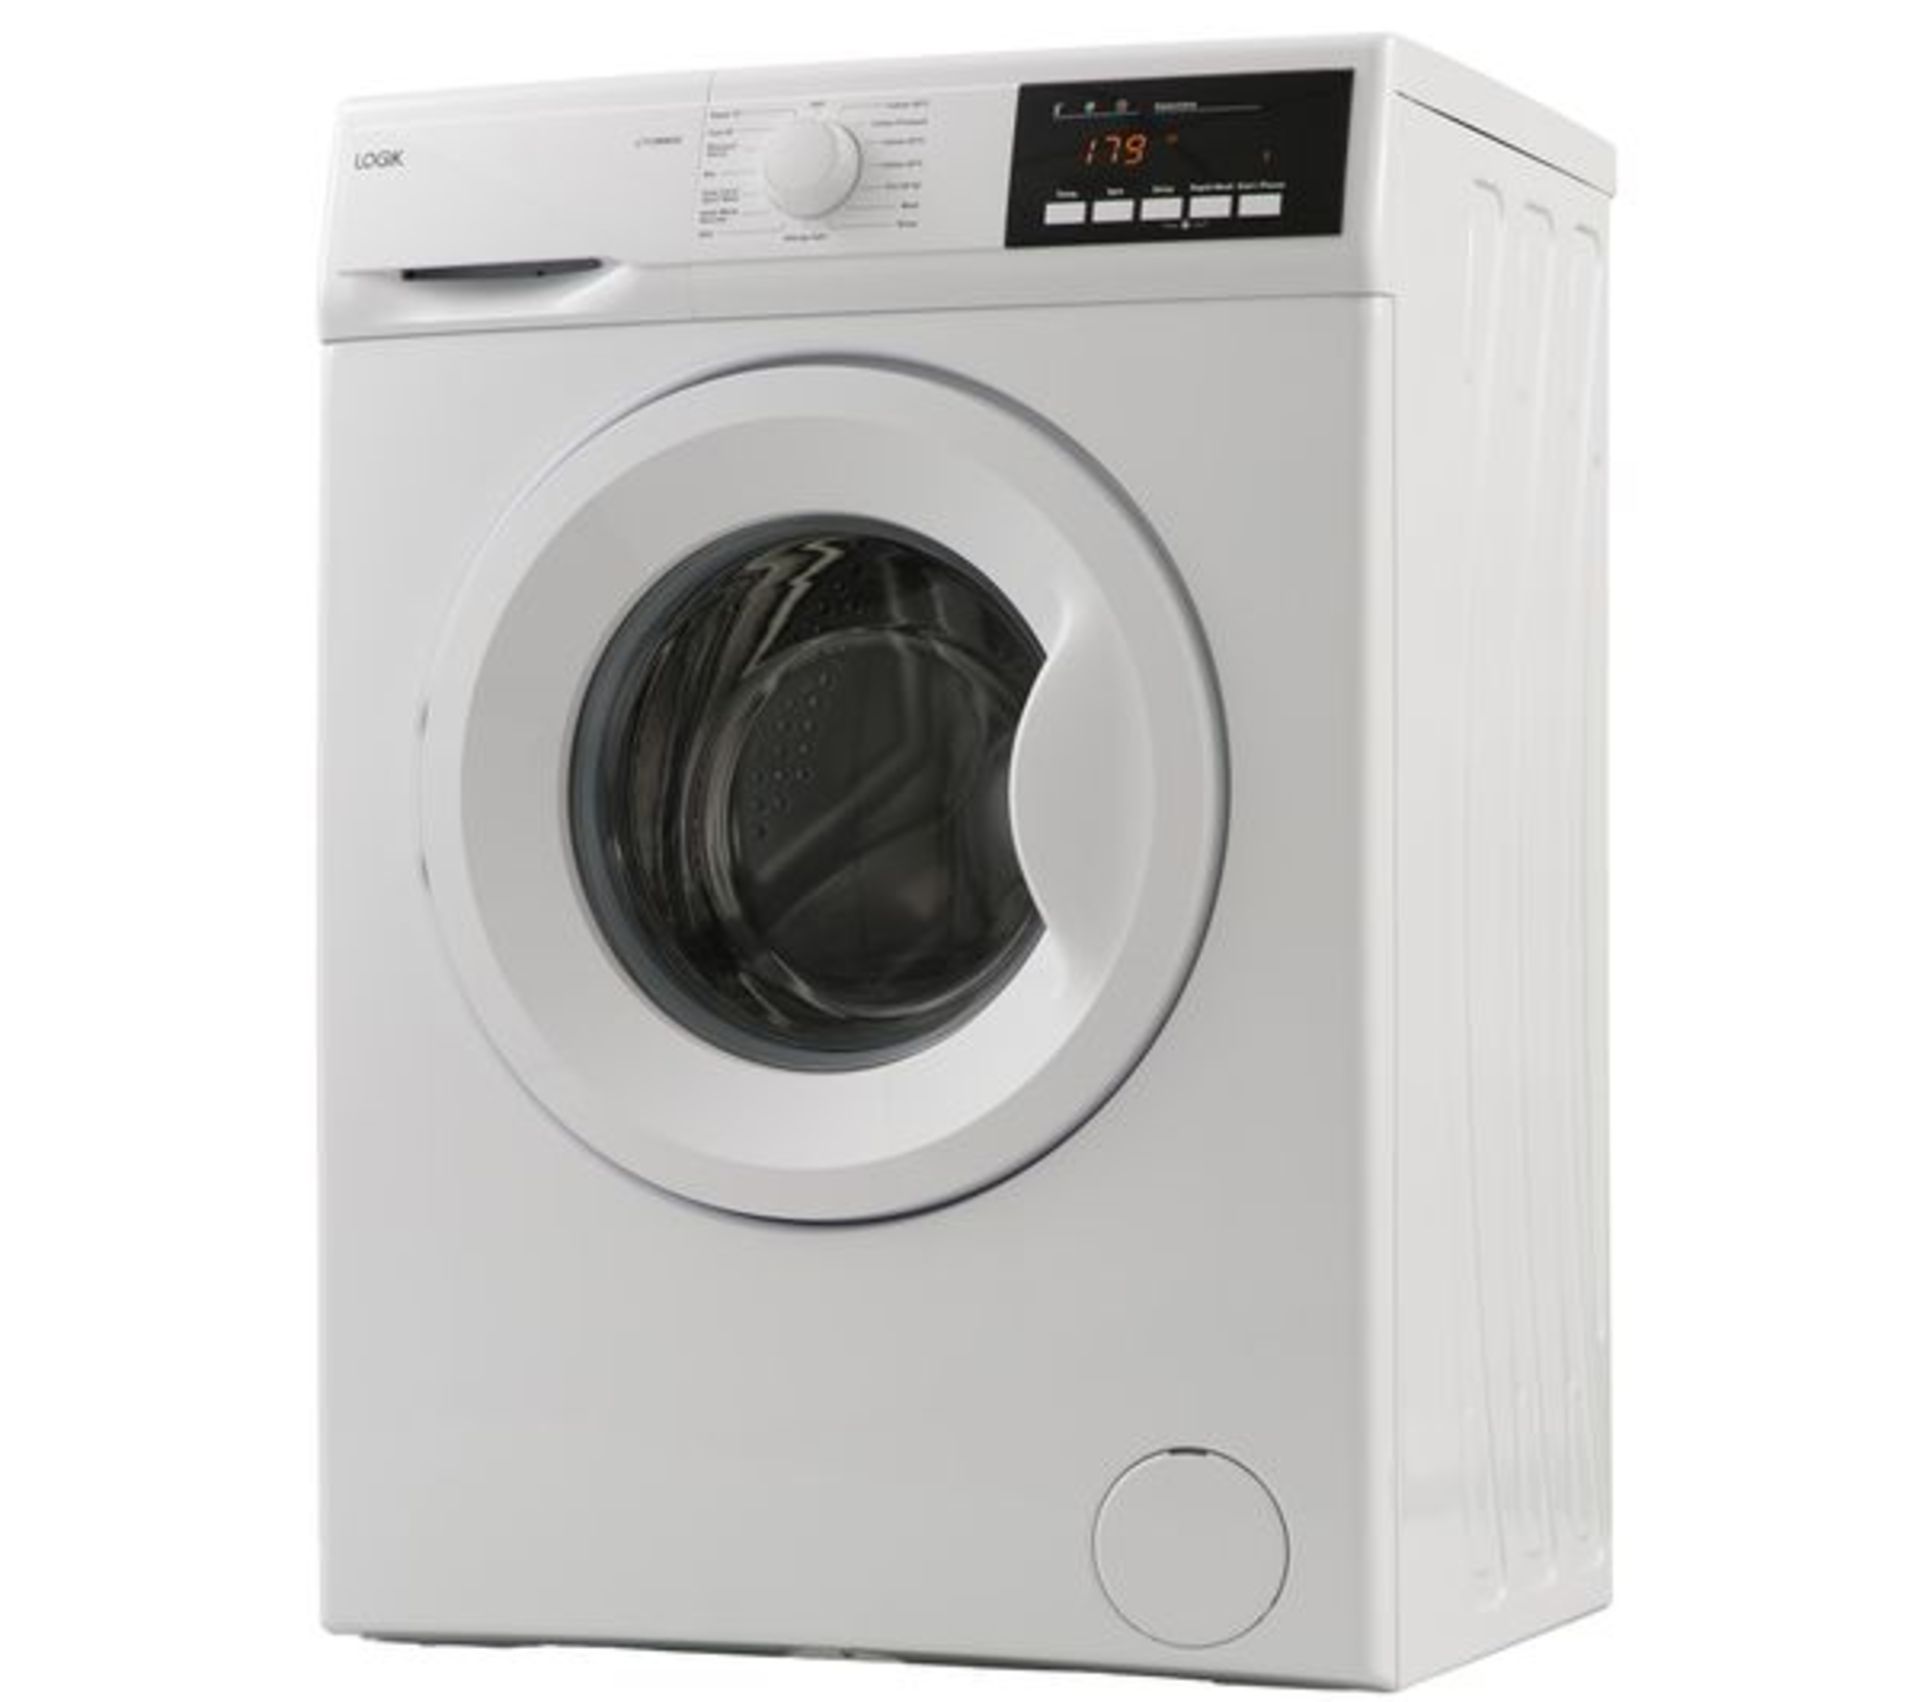 Pallet of Mixed Logik Laundry White Goods. Latest selling price £1129.94* - Image 2 of 7